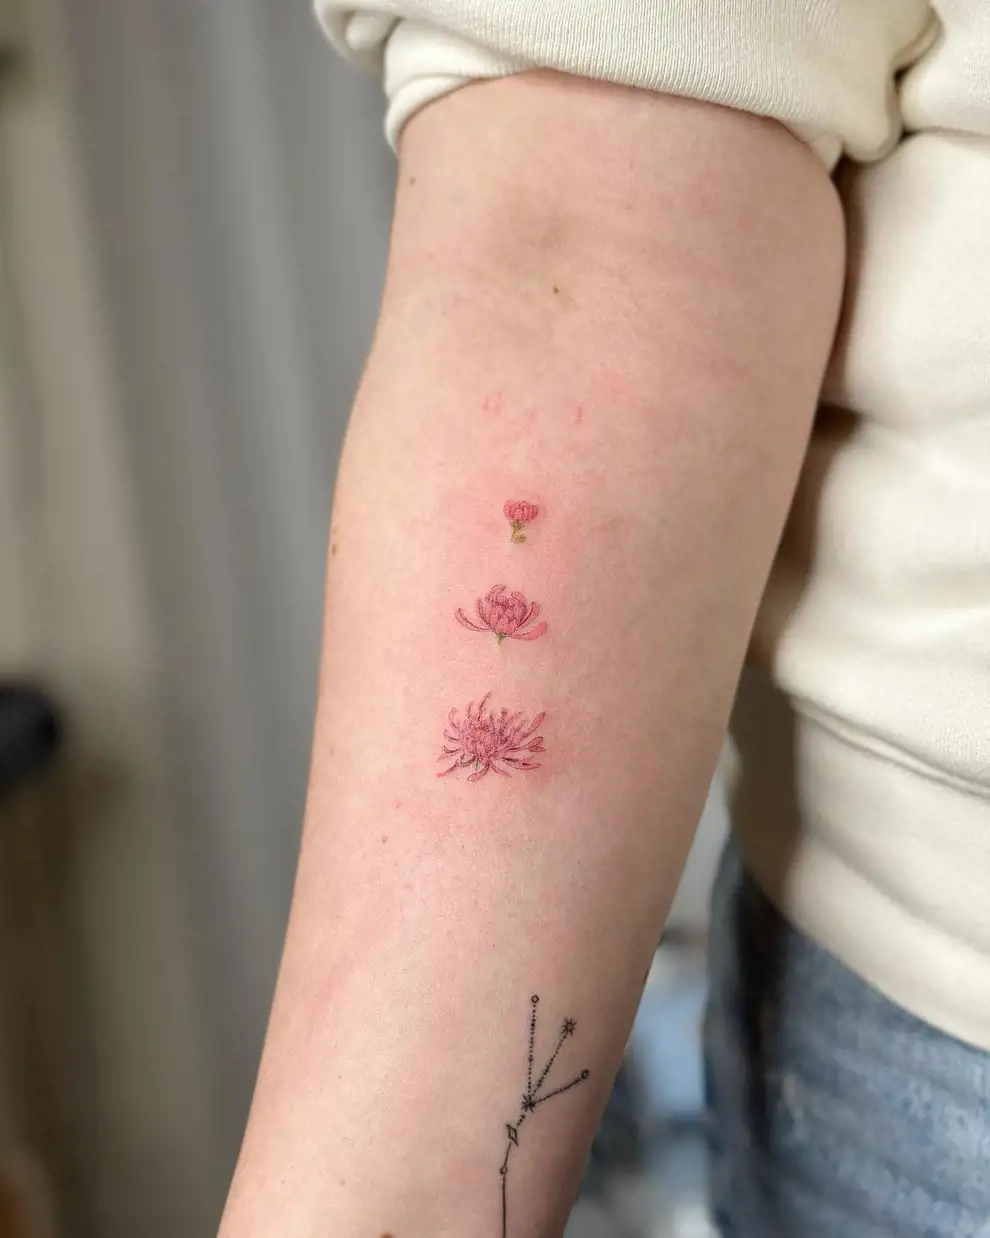 Tatuajes pequeños para mujer originales: floreciendo